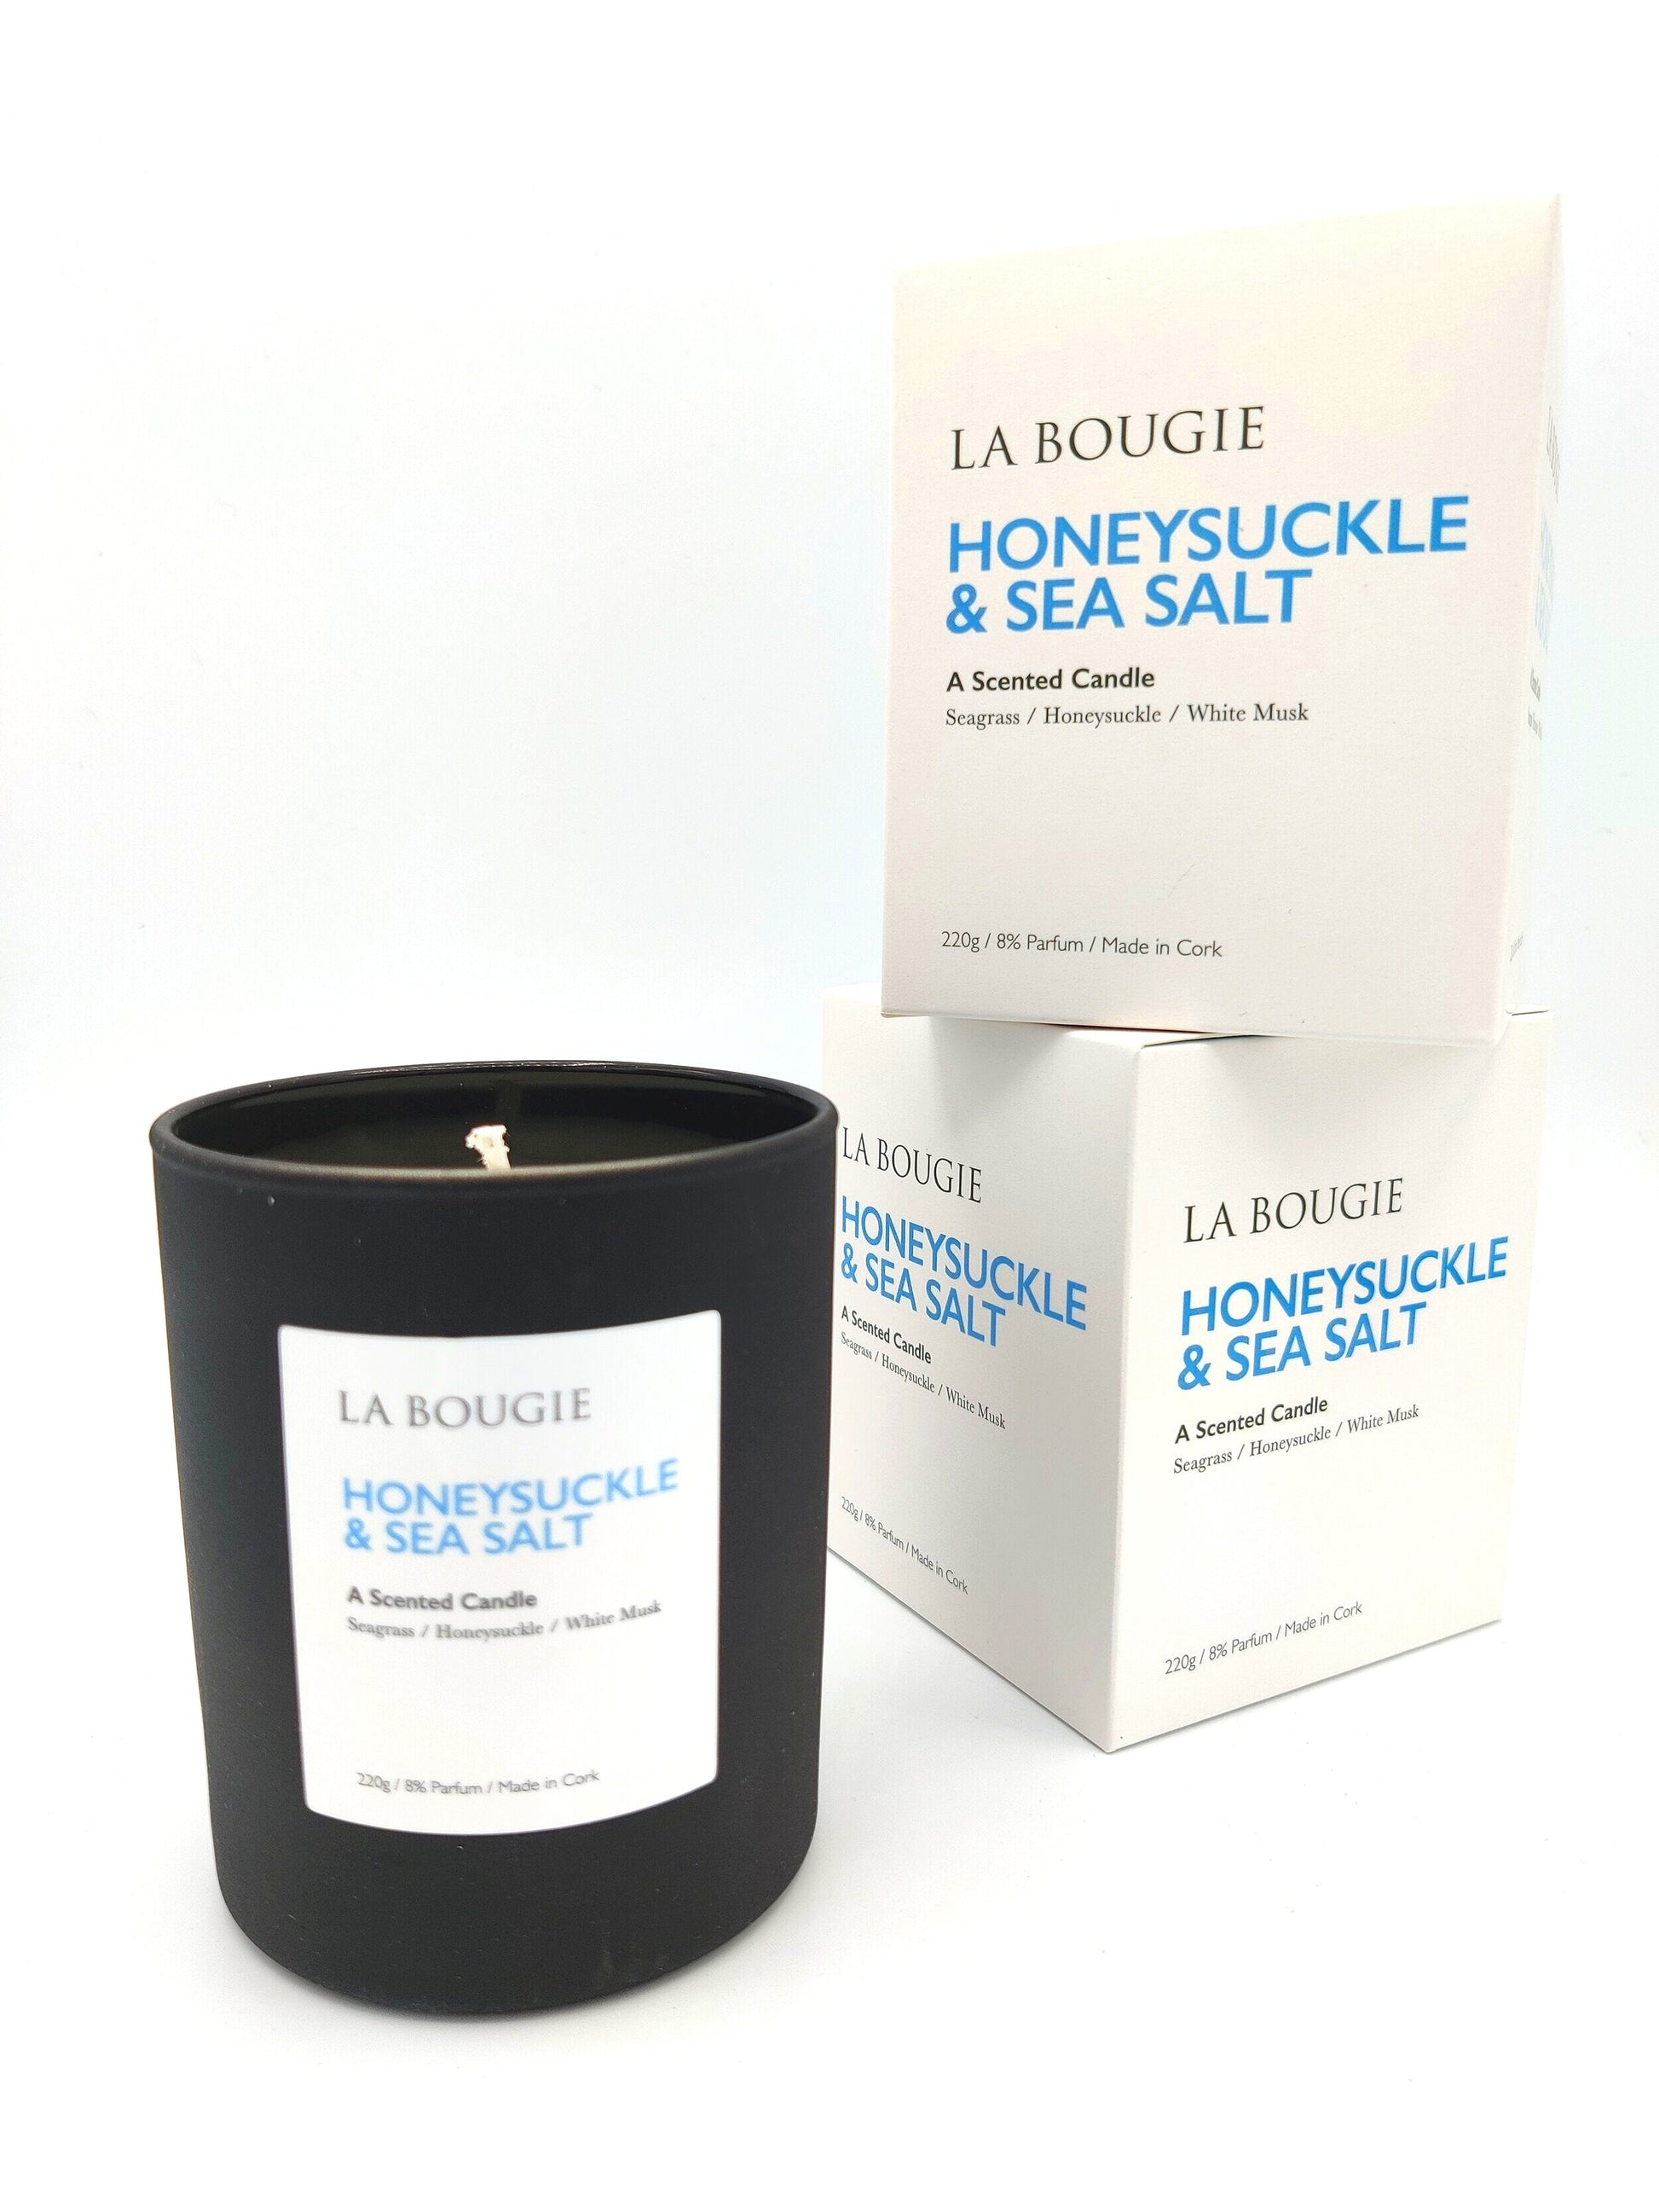 La Bougie Honeysuckle & Seasalt 220g Candle